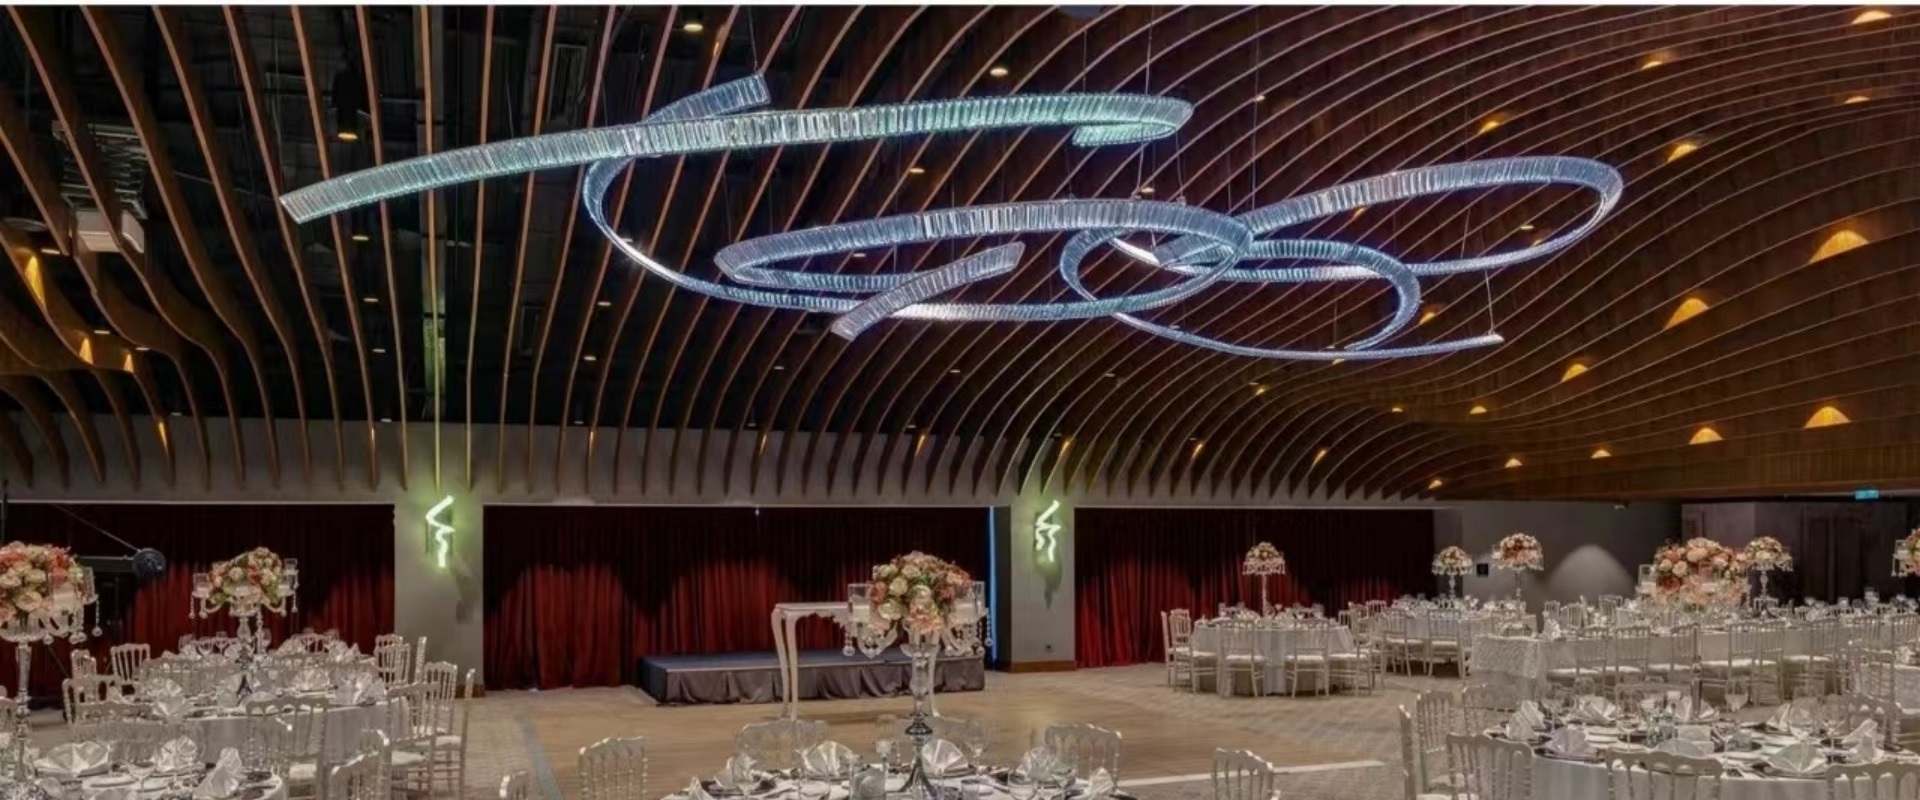 Dutti LED Modern Non-standard Chandelier RGB Remote Control Ceiling Pendant Lighting OEM/ODM custom for Banquet Hall